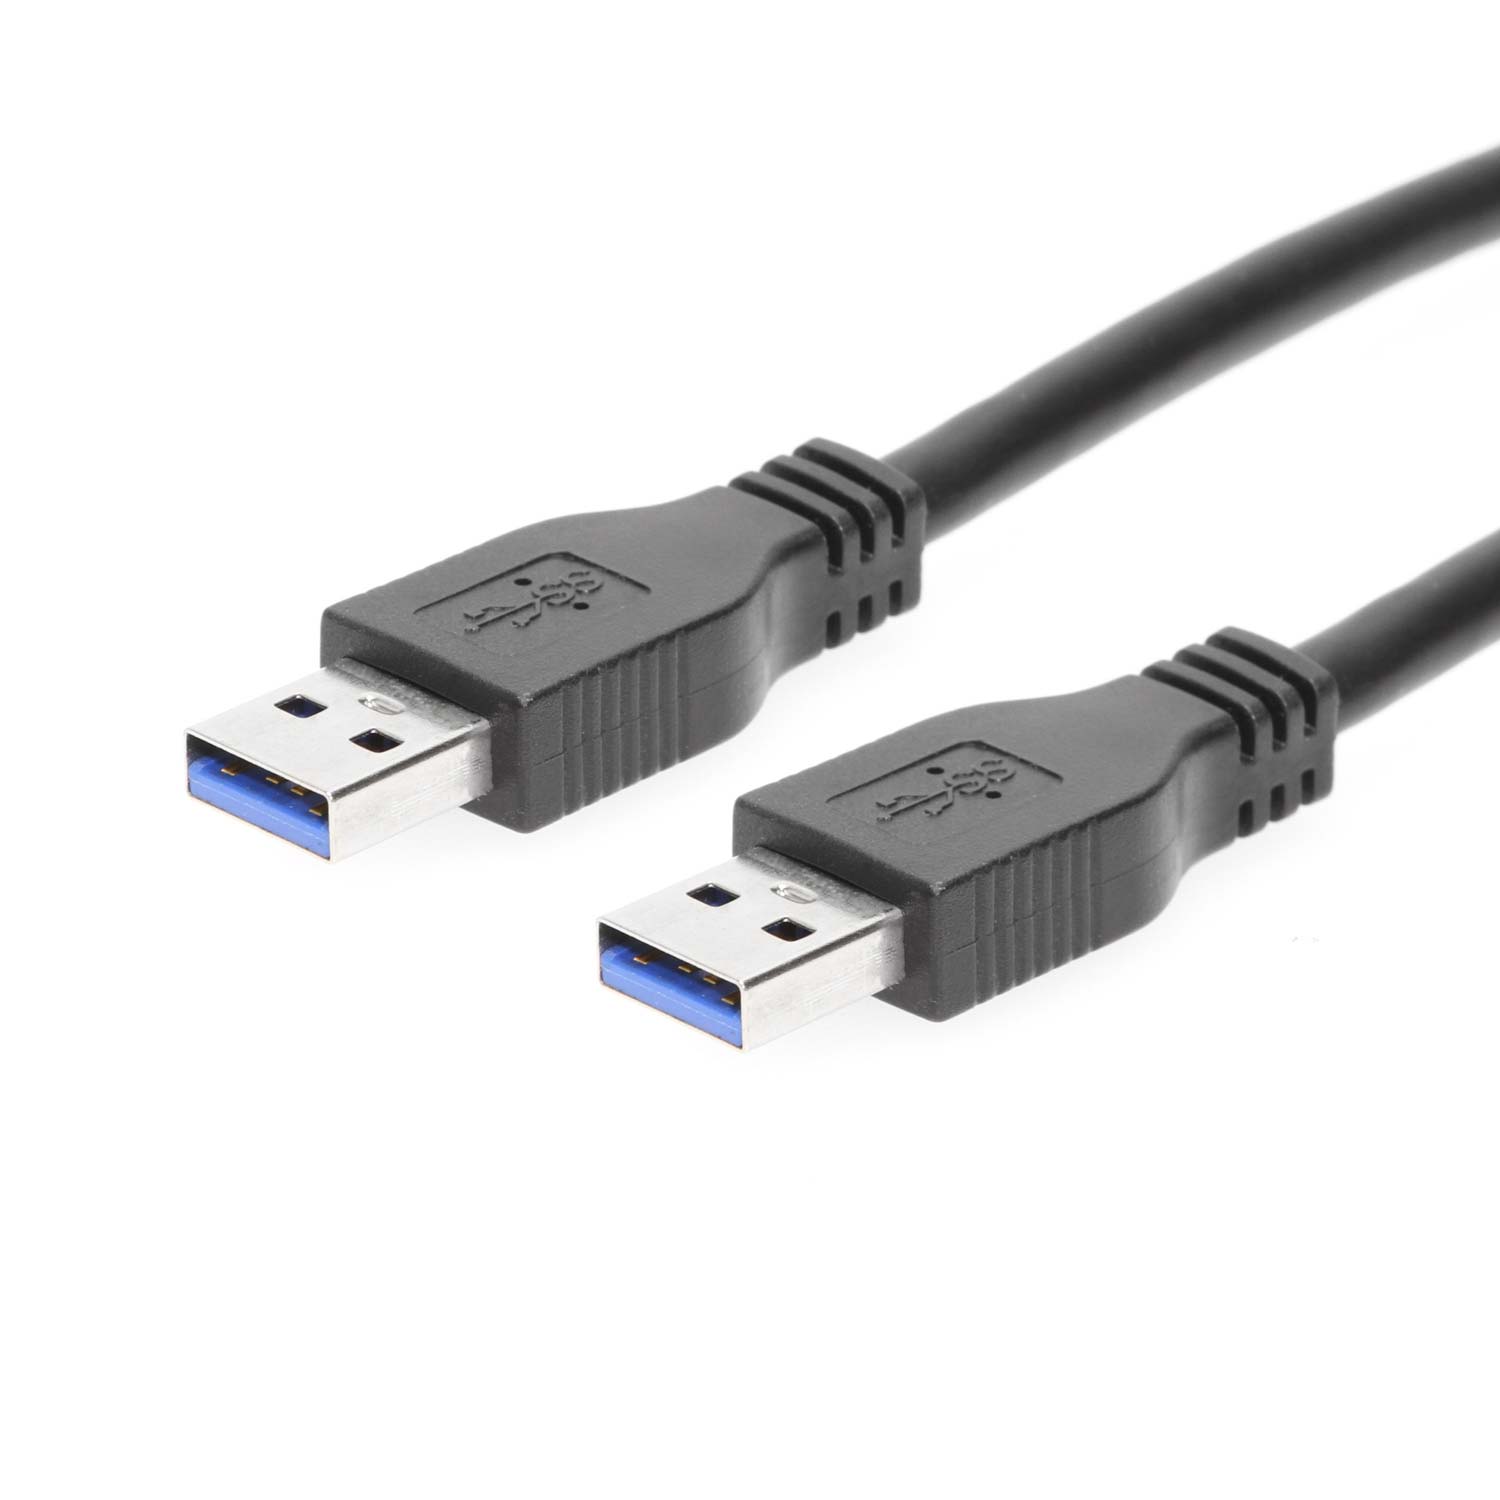 persona Motear Buena suerte 1ft USB 3.2 Gen 1 Type-A Male to Male Super-Speed Device Cable